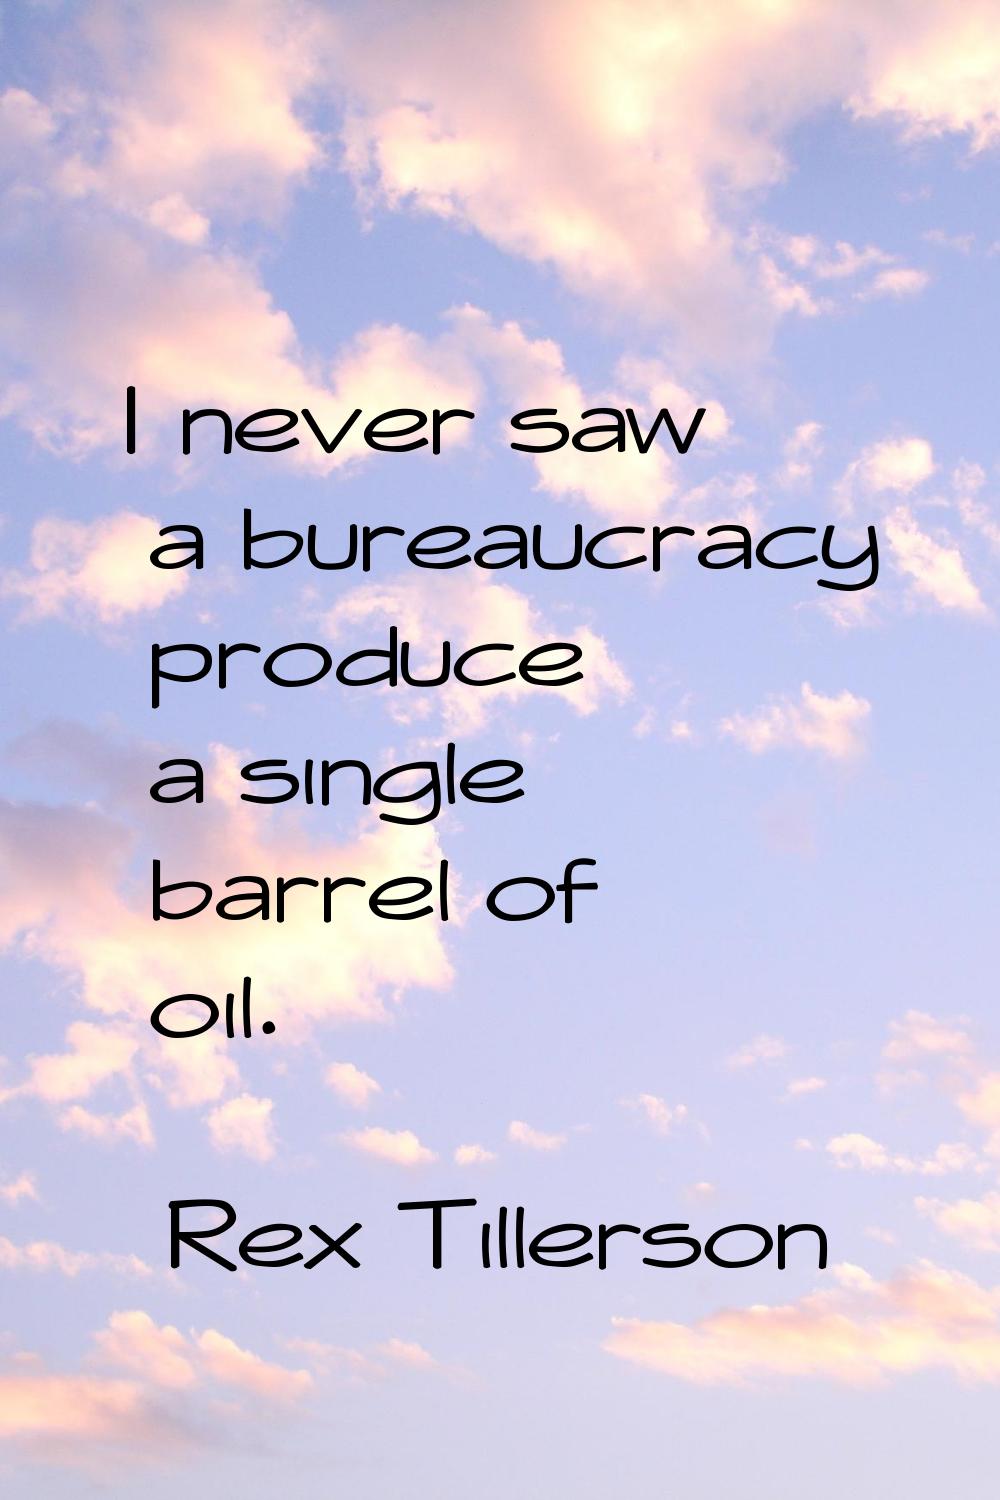 I never saw a bureaucracy produce a single barrel of oil.